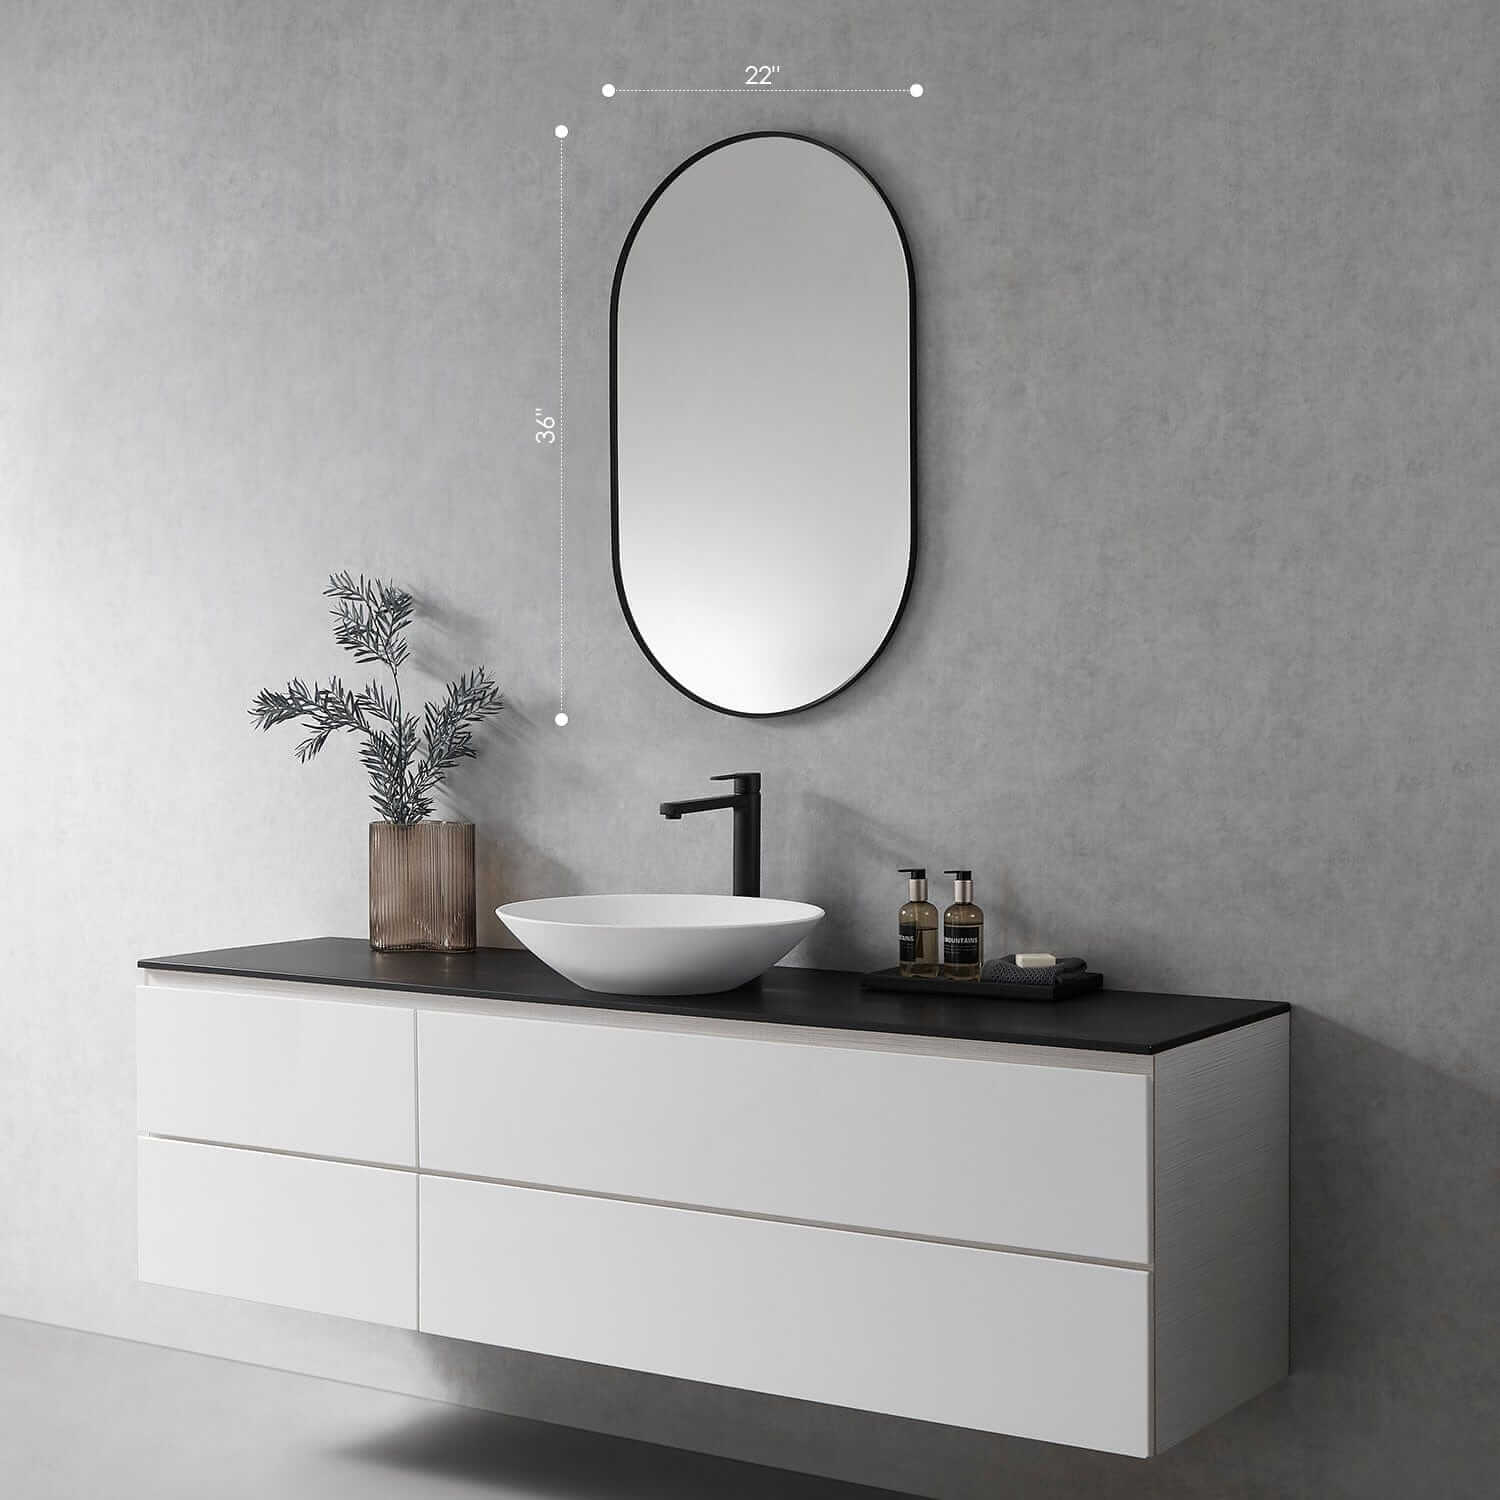 Bathroom Mirror - Altair Ispra 22W x 36H - 757036-MIR-BF